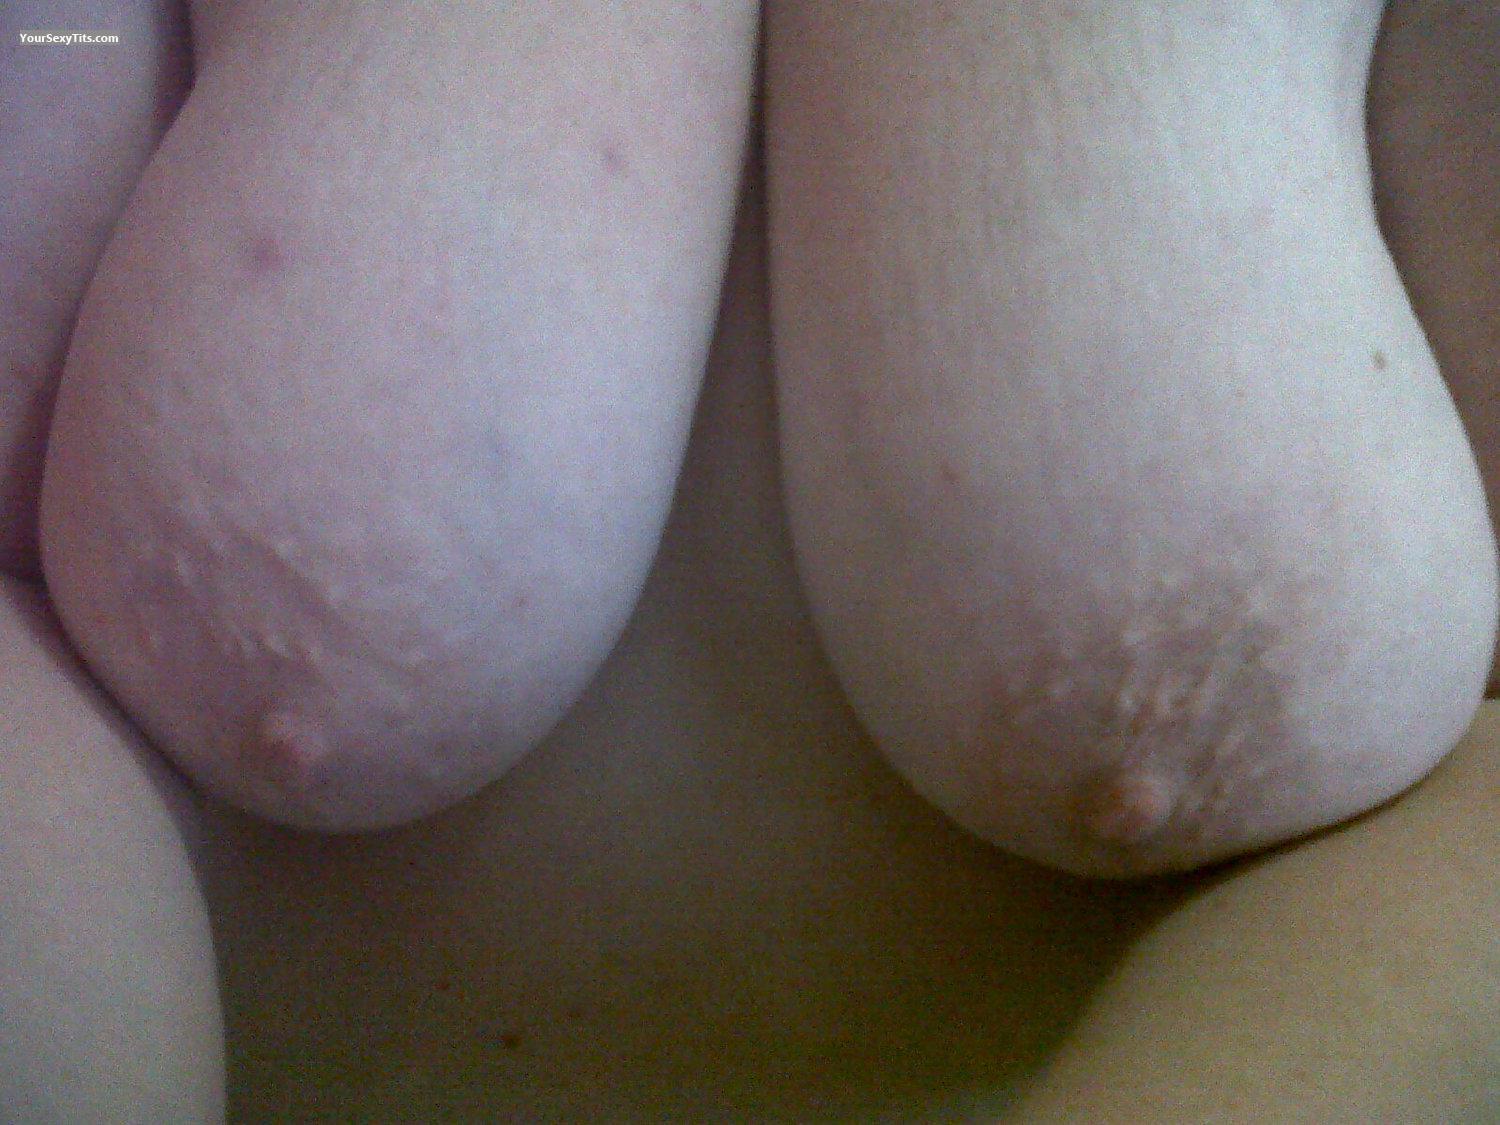 Big Tits Of My Wife Selfie by SweetJ